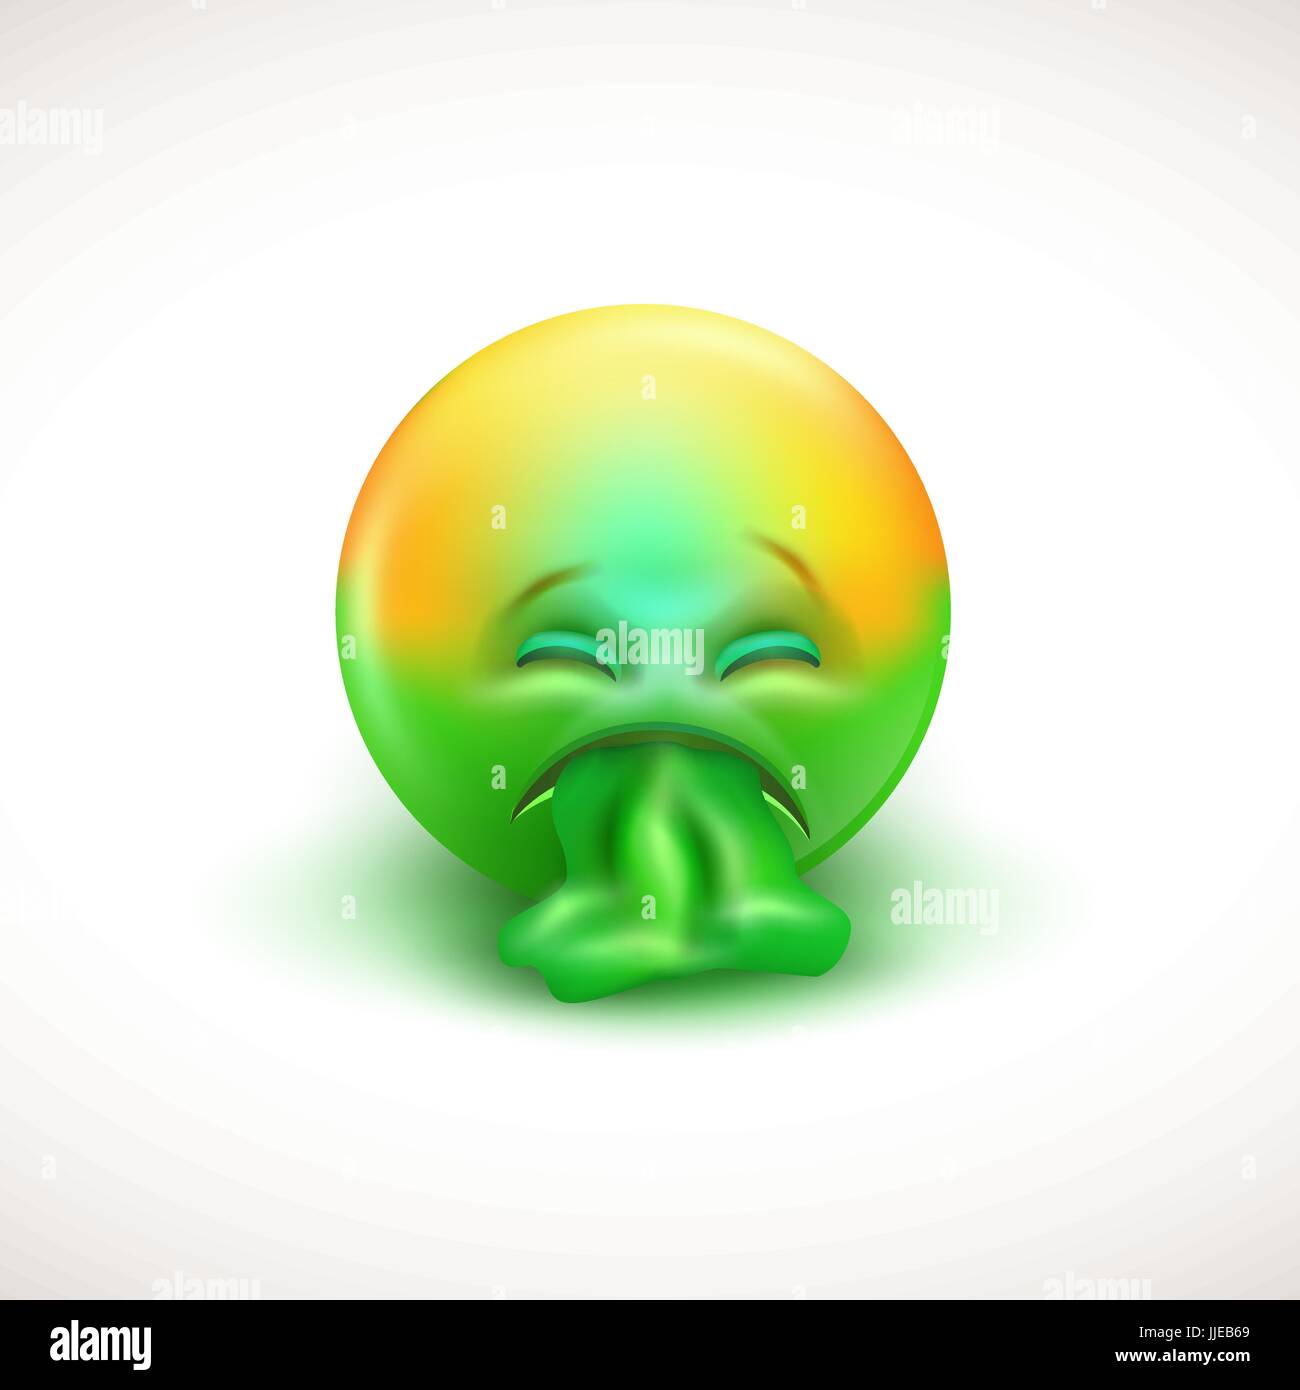 Krank Emoticon mit Zunge heraus - Vektor-illustration Stock Vektor